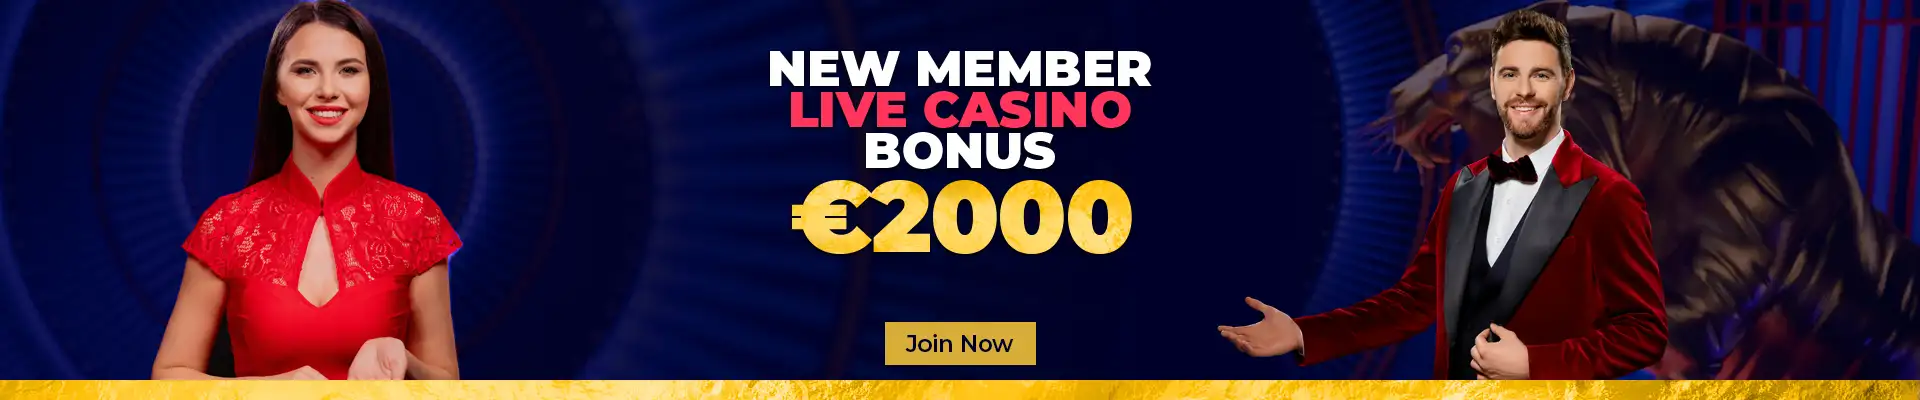 club-riches-banner-1920x400-en-new-member-live-casino-bonus-EUR